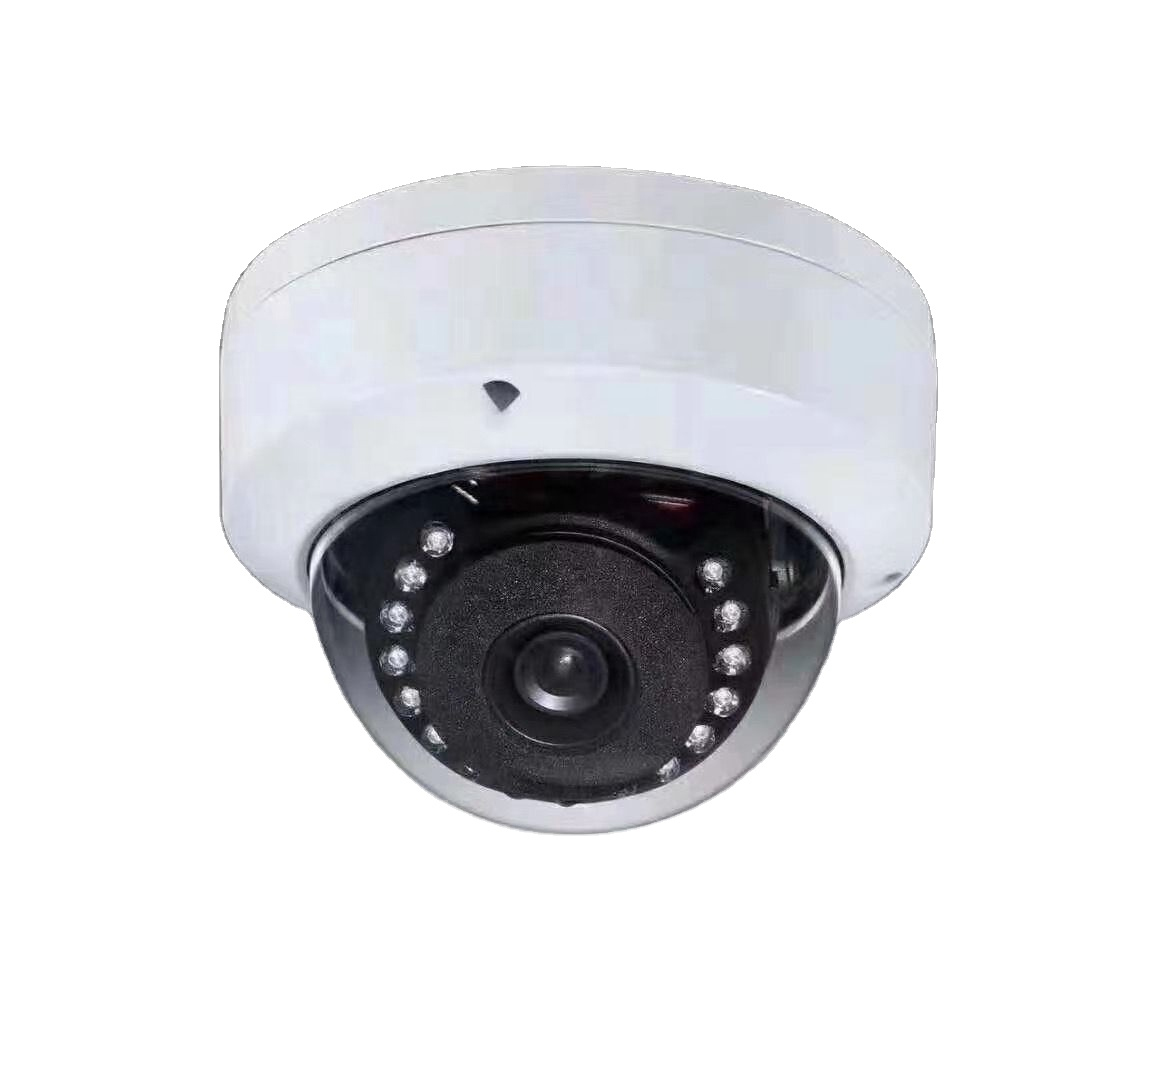 HD 720P wifi camera waterproof surveillance support sd 64GB Wireless p2p two way audio IP camera Featured Image